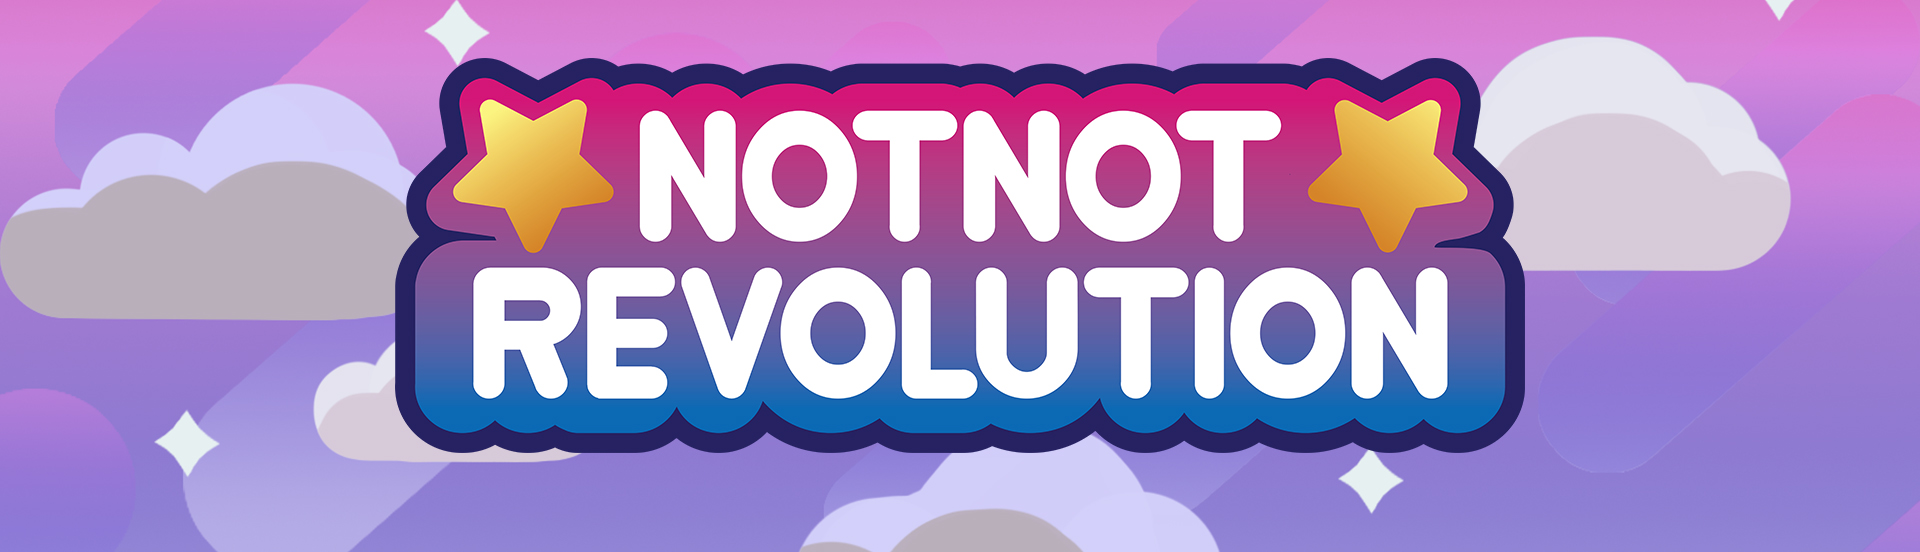 NotNot Revolution